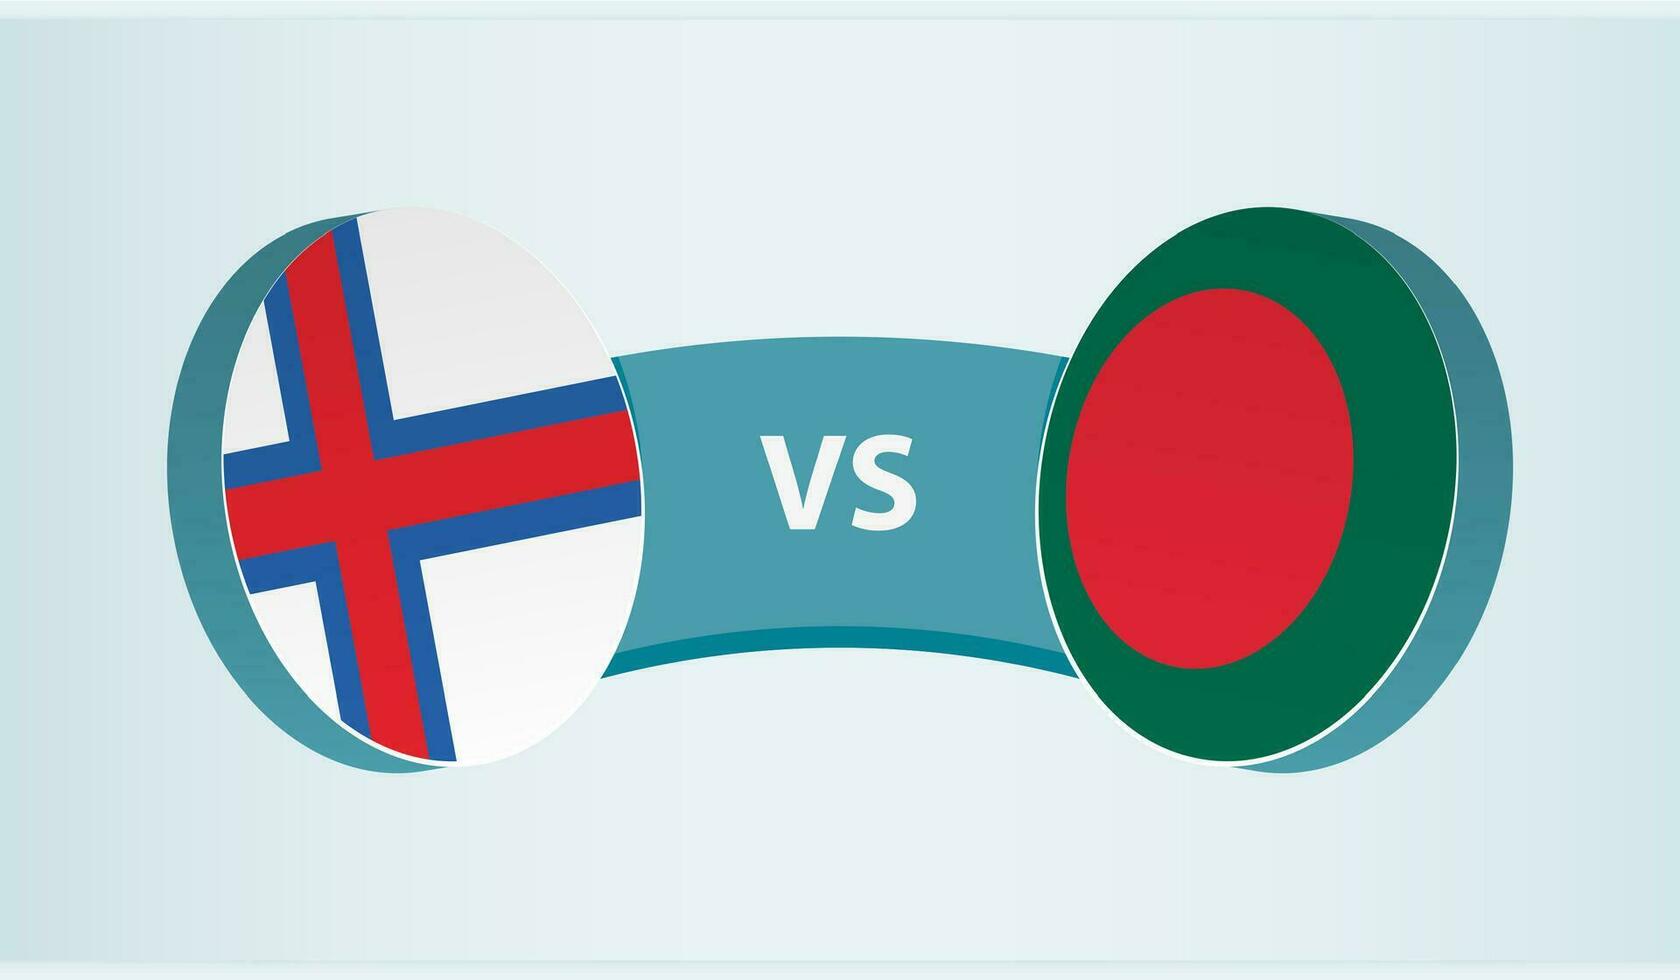 Faroe Islands versus Bangladesh, team sports competition concept. vector